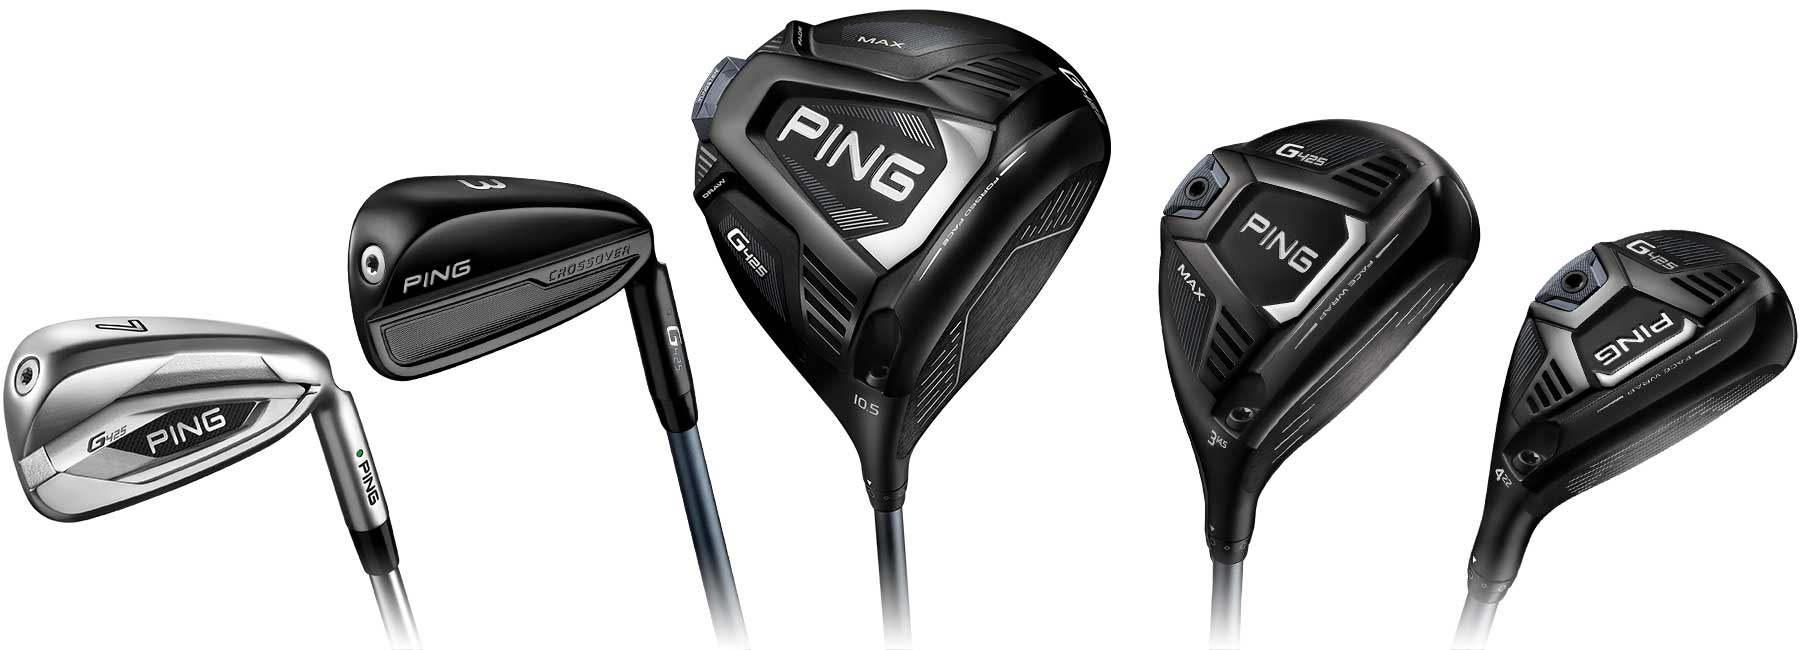 Ping G425 golf clubs